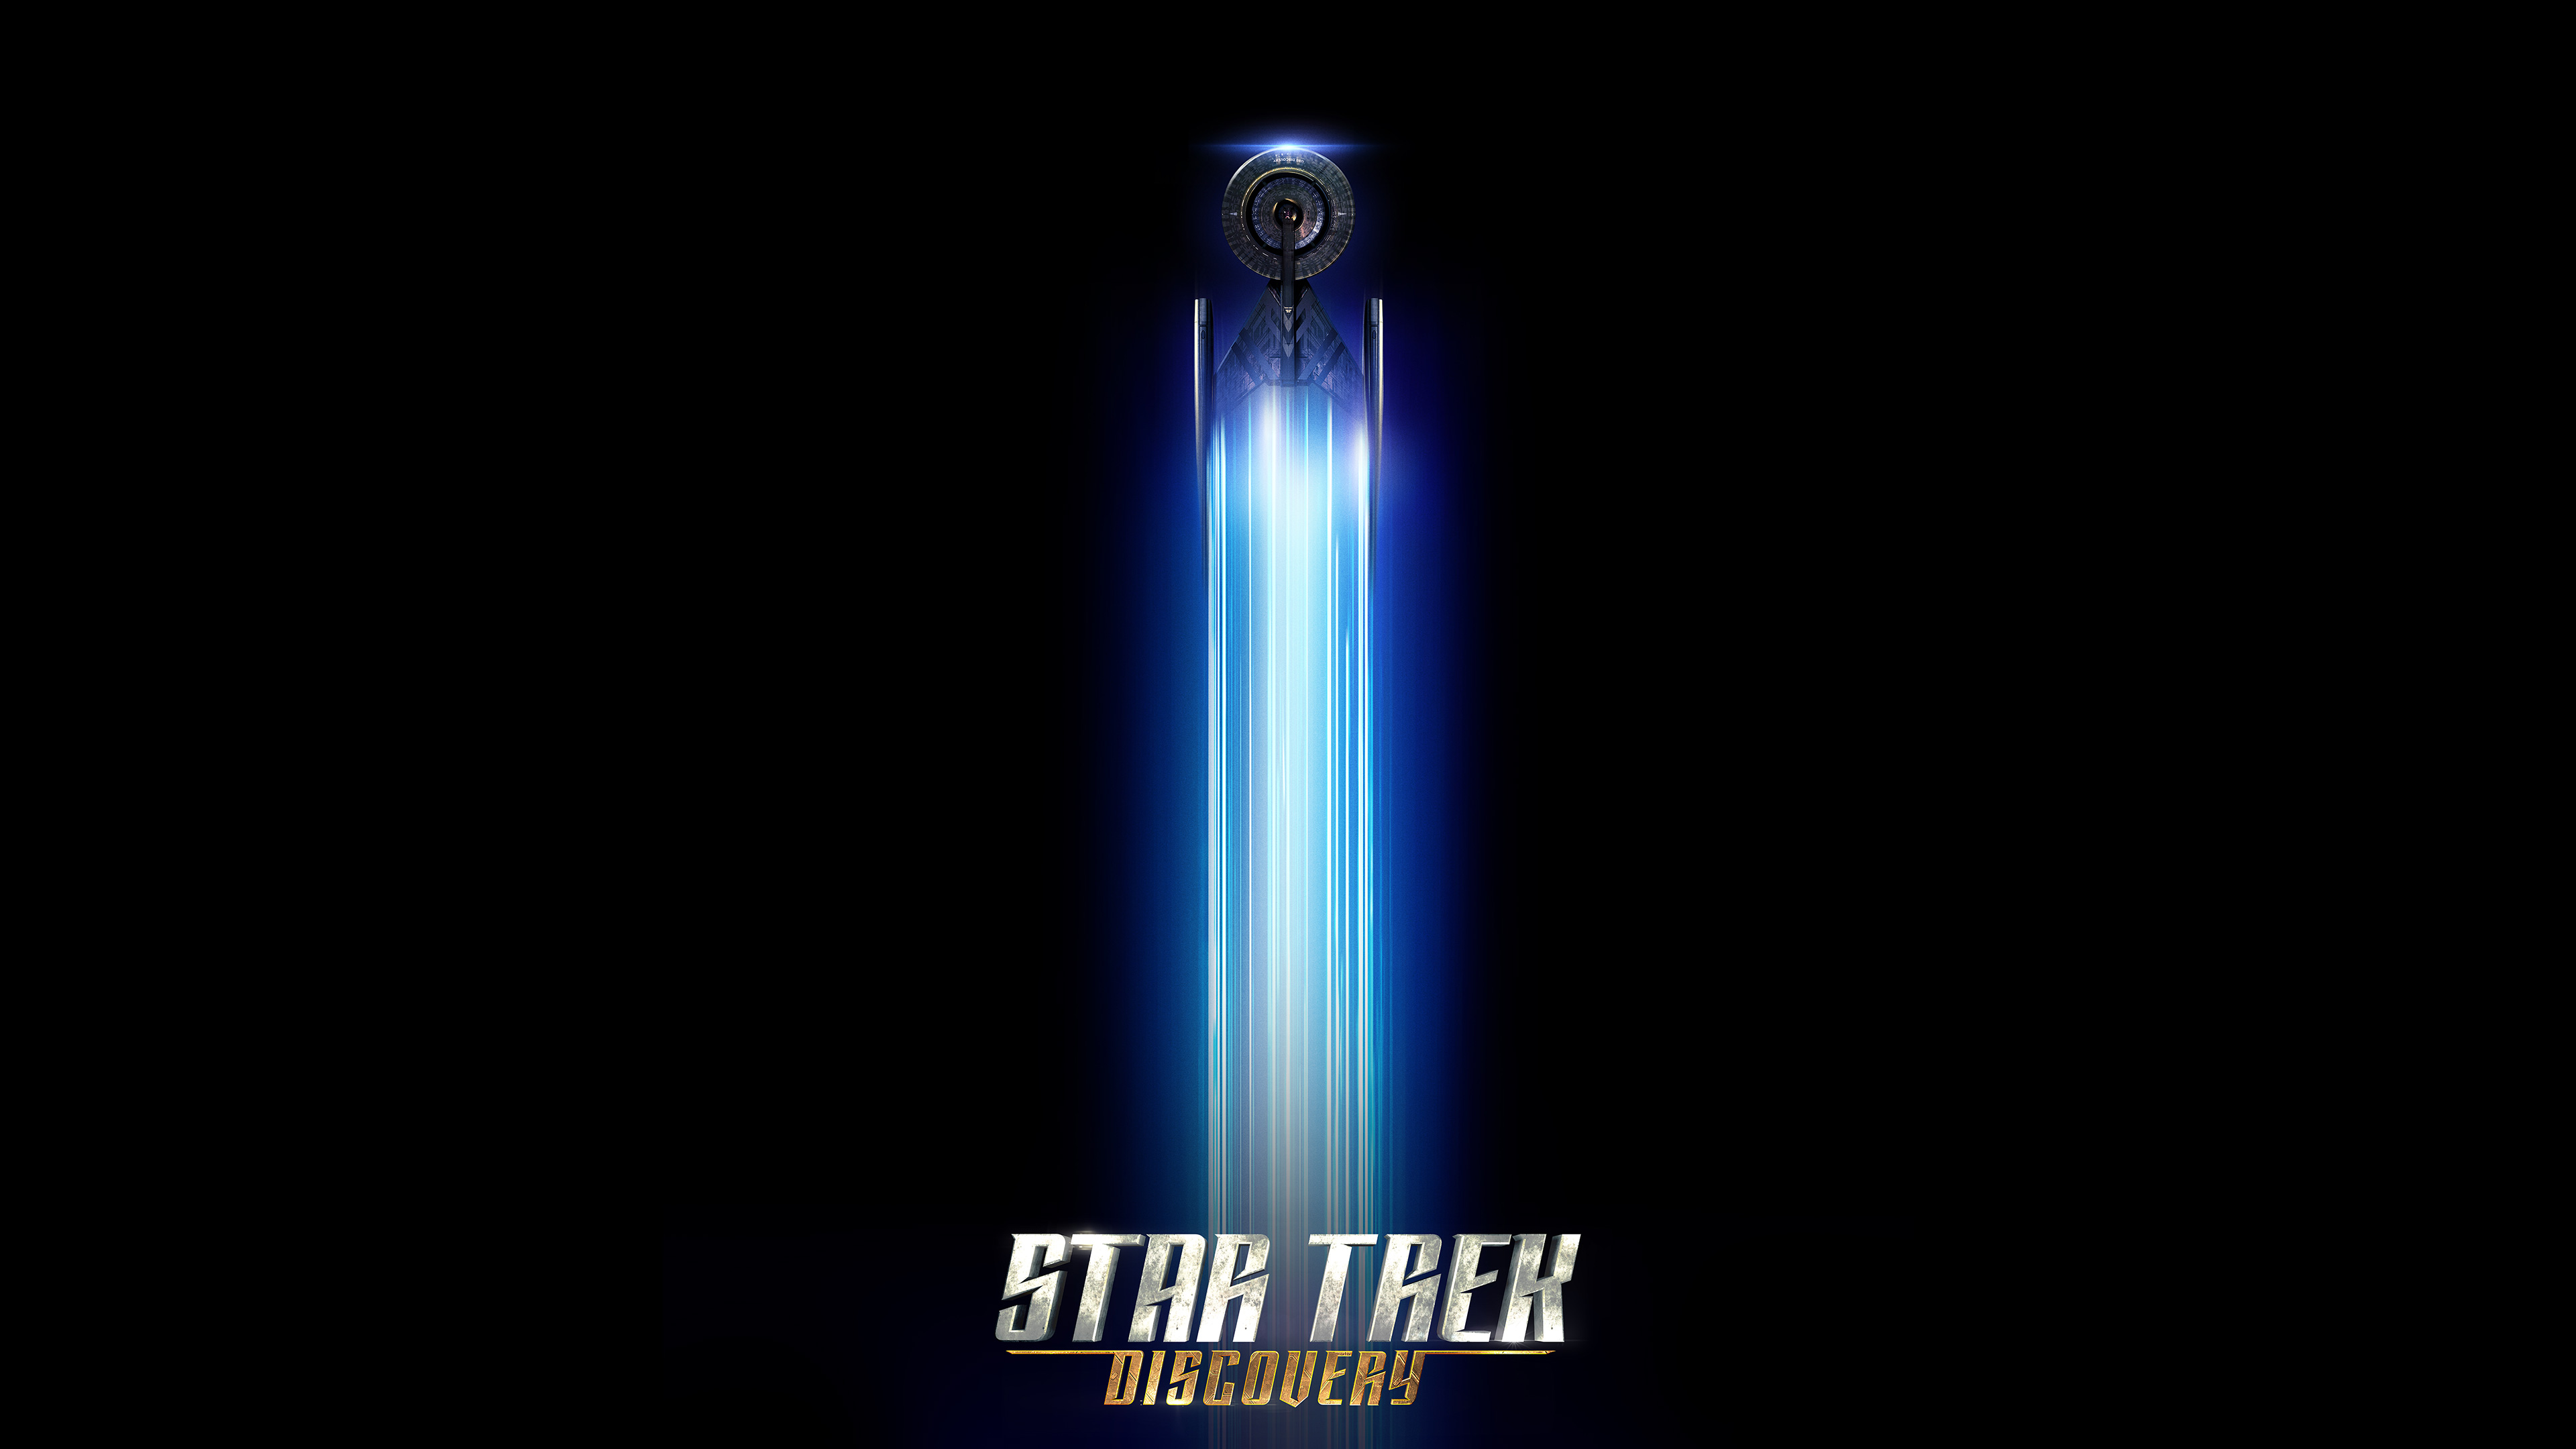 General 3840x2160 Star Trek star trek discovery science fiction black TV series Star Trek Ships simple background blue black background title spaceship